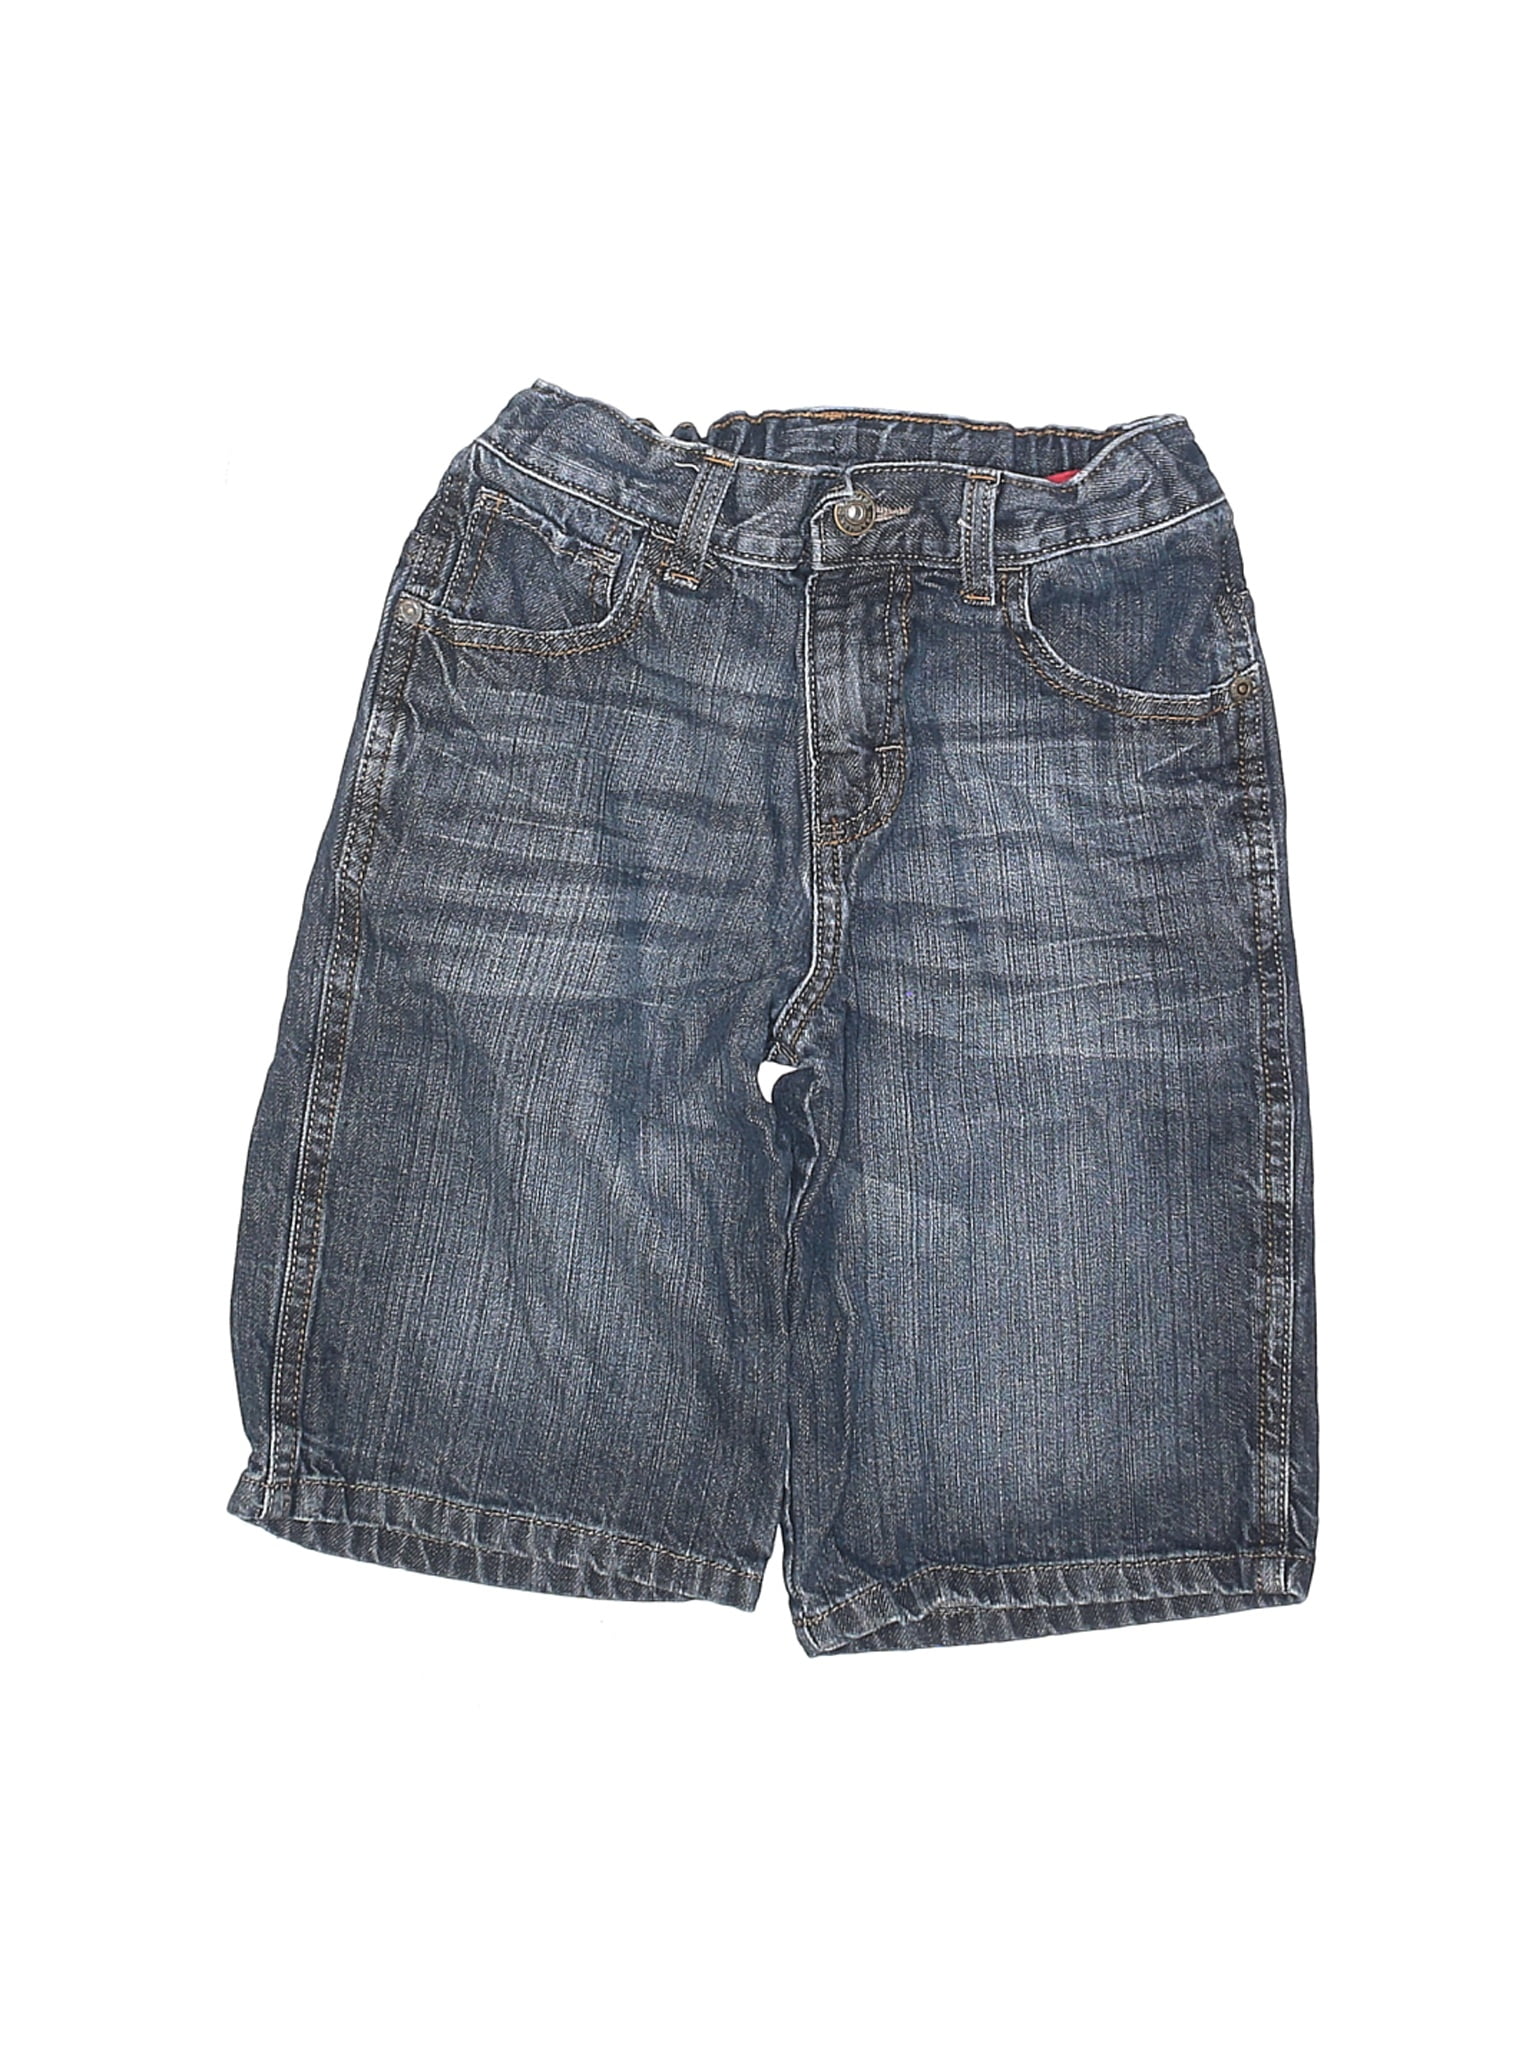 boys jean shorts size 10